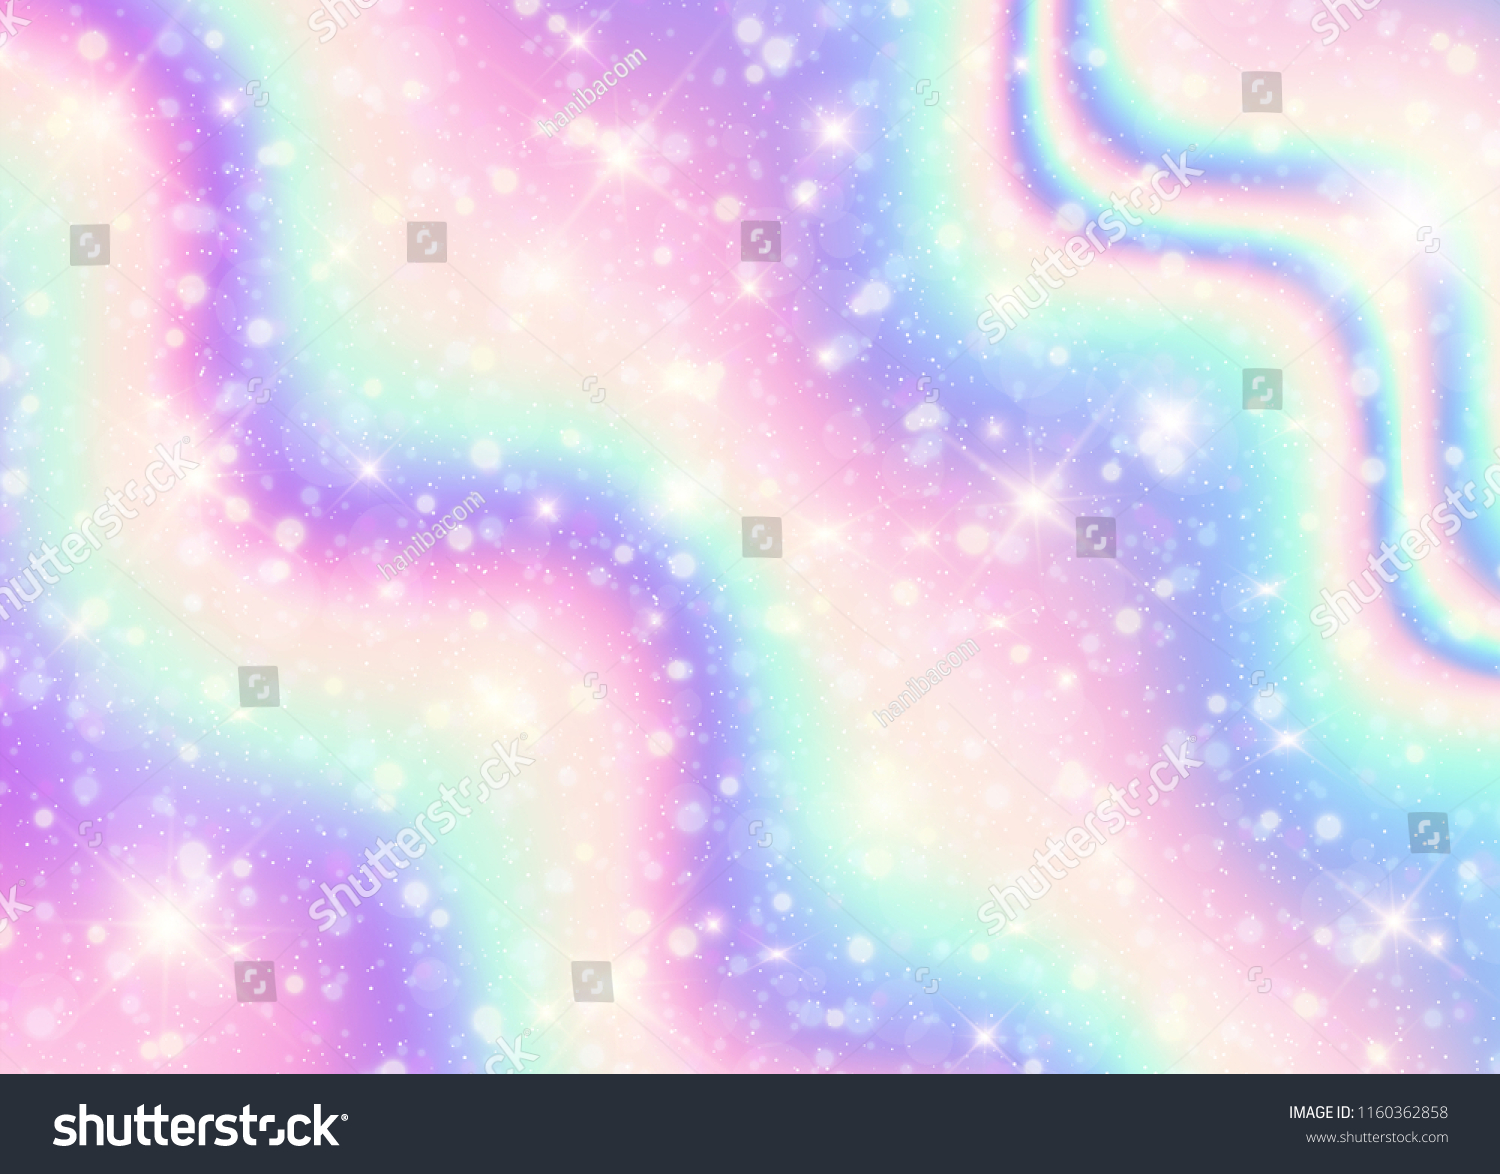 Vector Illustration Galaxy Fantasy Background Pastel Stock Vector Royalty Free 1160362858